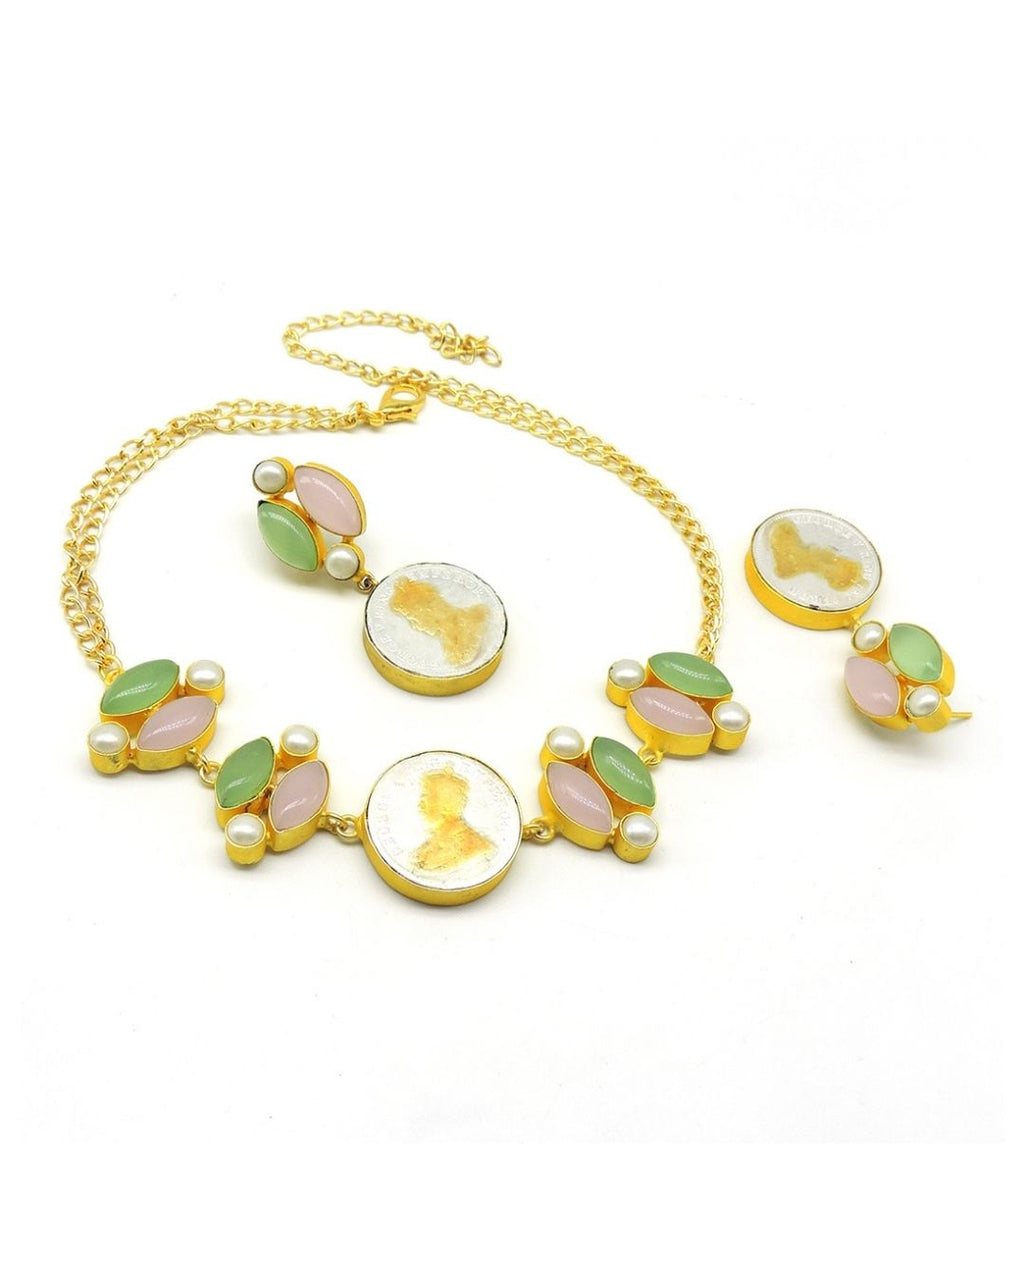 Ariya Necklace - Necklaces - Handcrafted Jewellery - Made in India - Dubai Jewellery, Fashion & Lifestyle - Dori